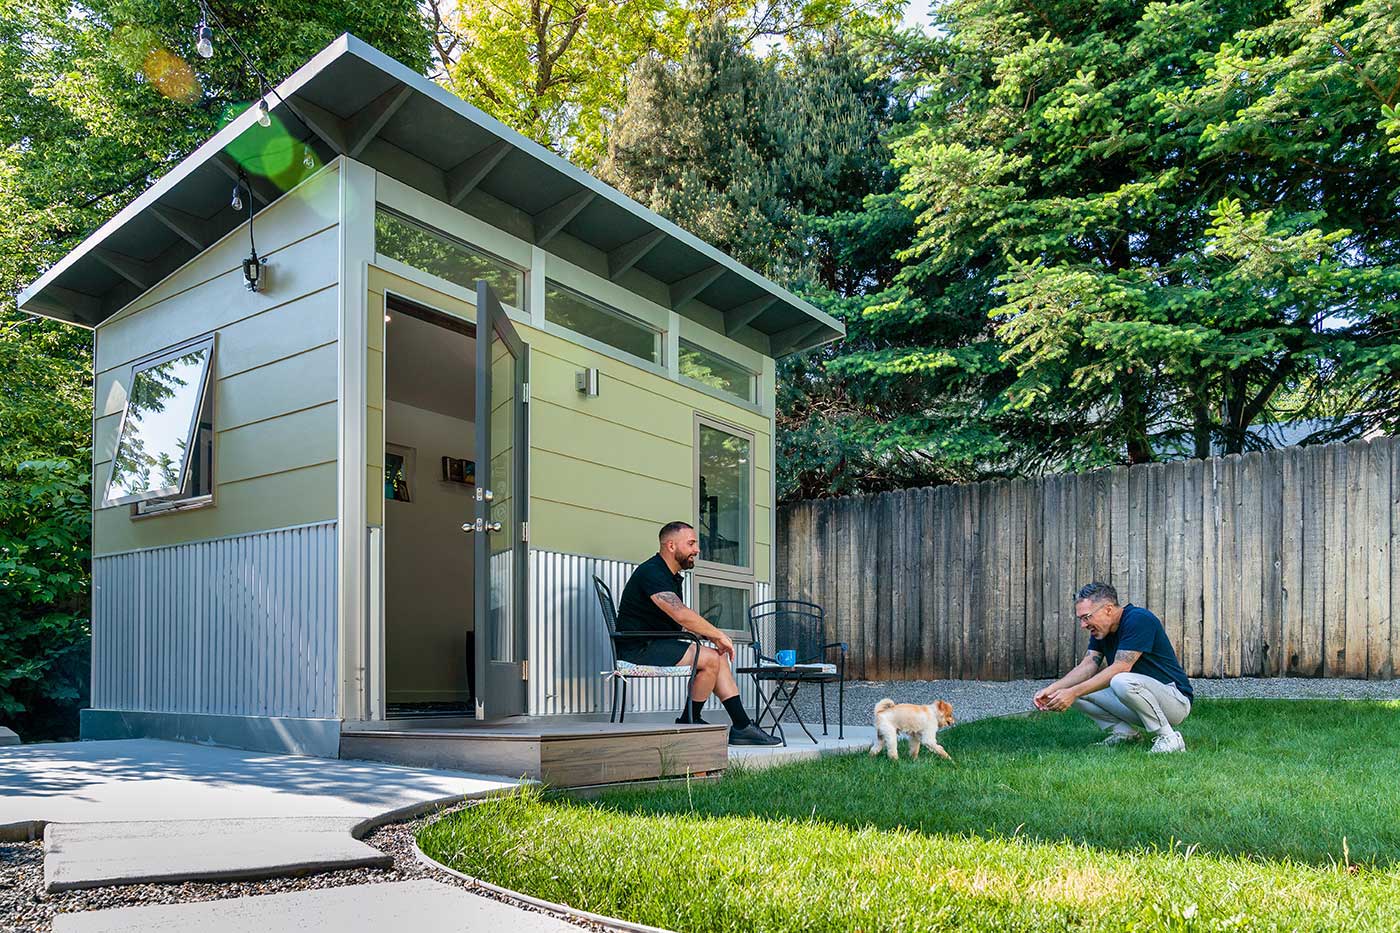 A green Studio Shed Accessory Dwelling Unit (ADU) featuring Marvin Essential windows.